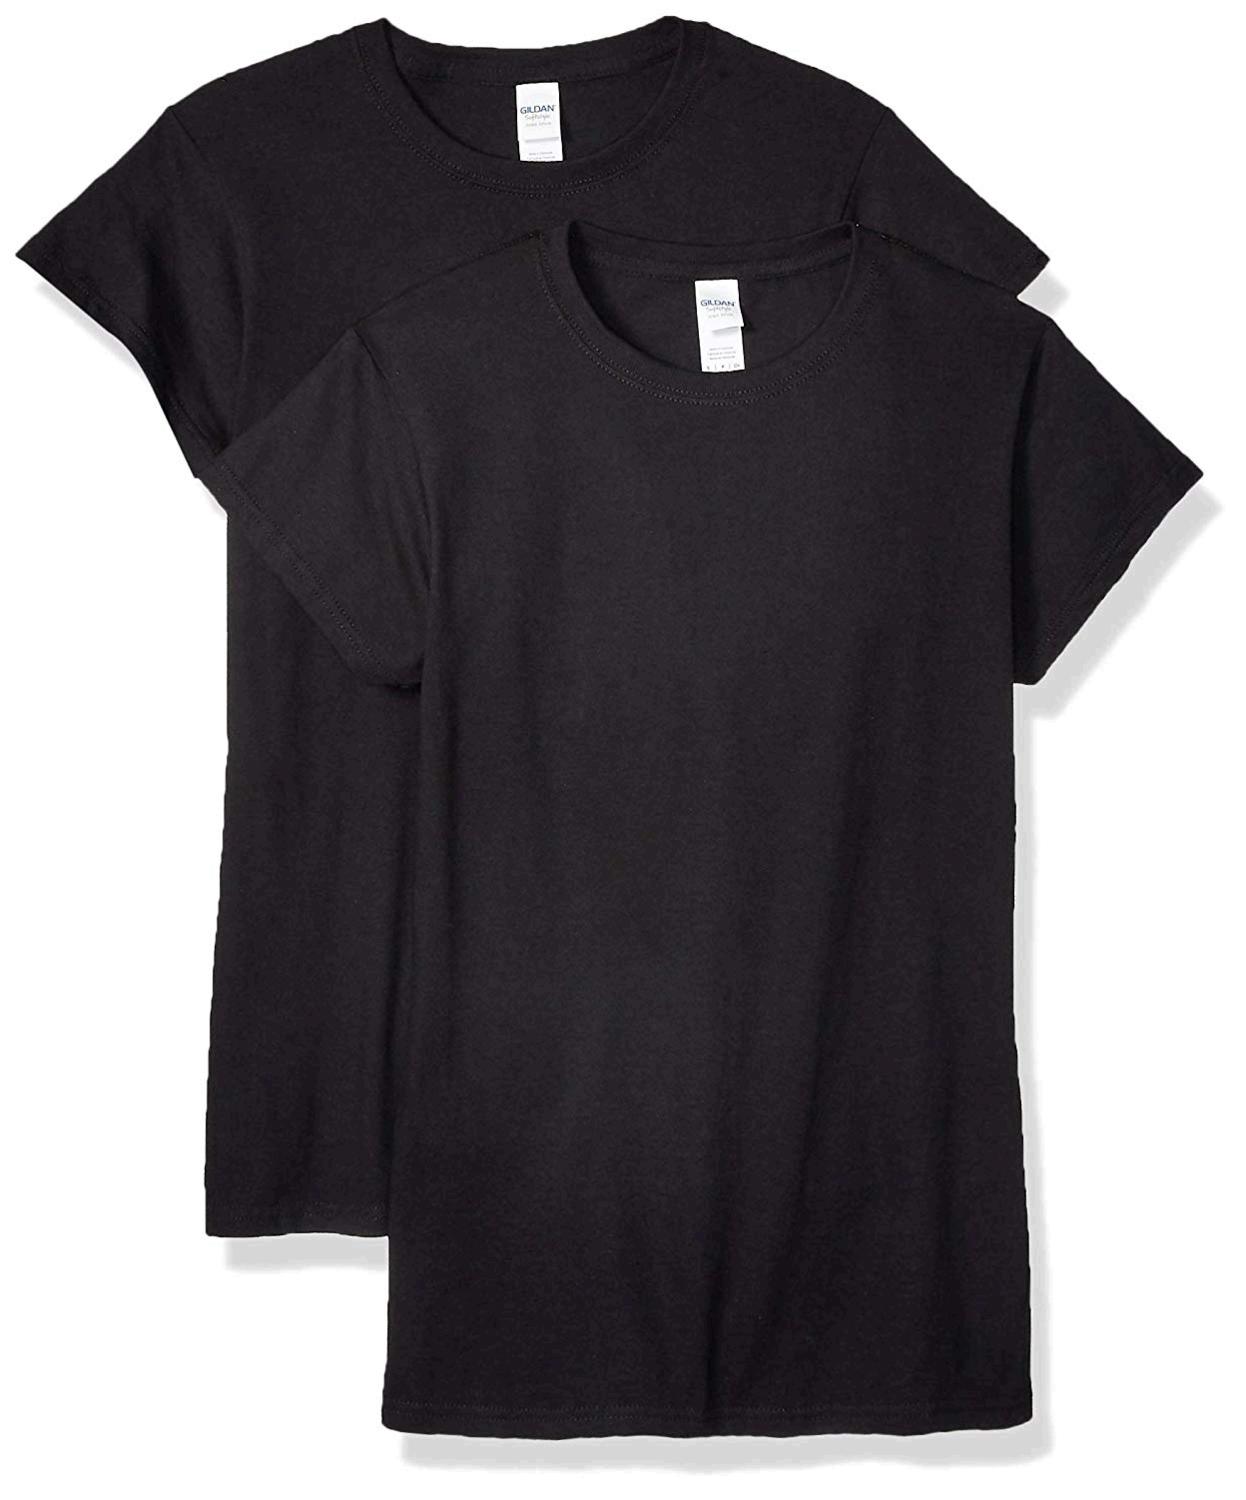 Gildan Women's Fitted Cotton T-Shirt, 2-Pack, Black, Medium, Black ...